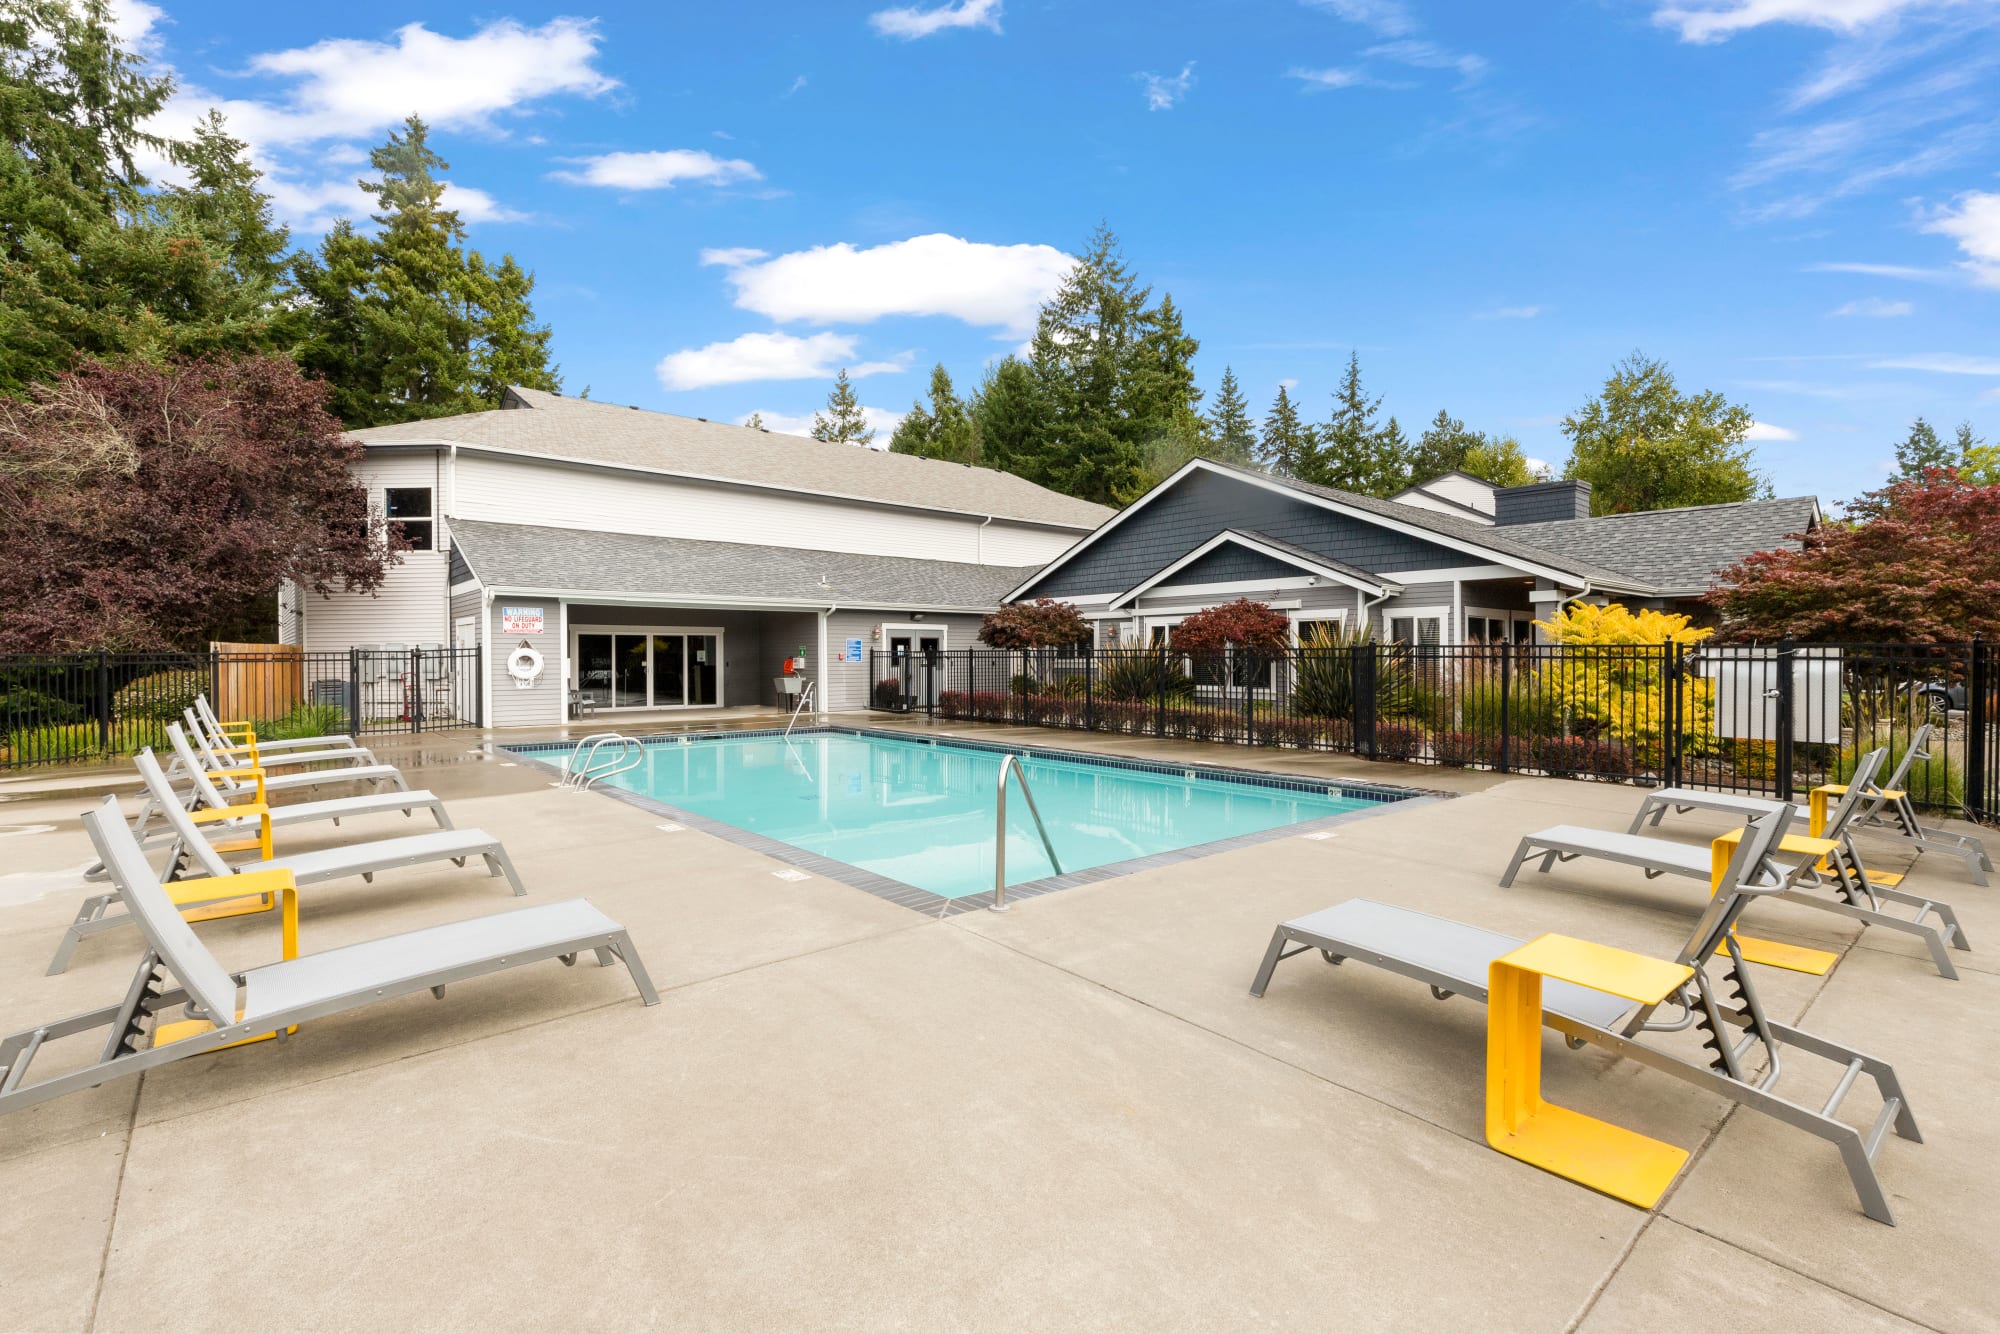 The sparkling pool at Cascade Ridge in Silverdale, Washington